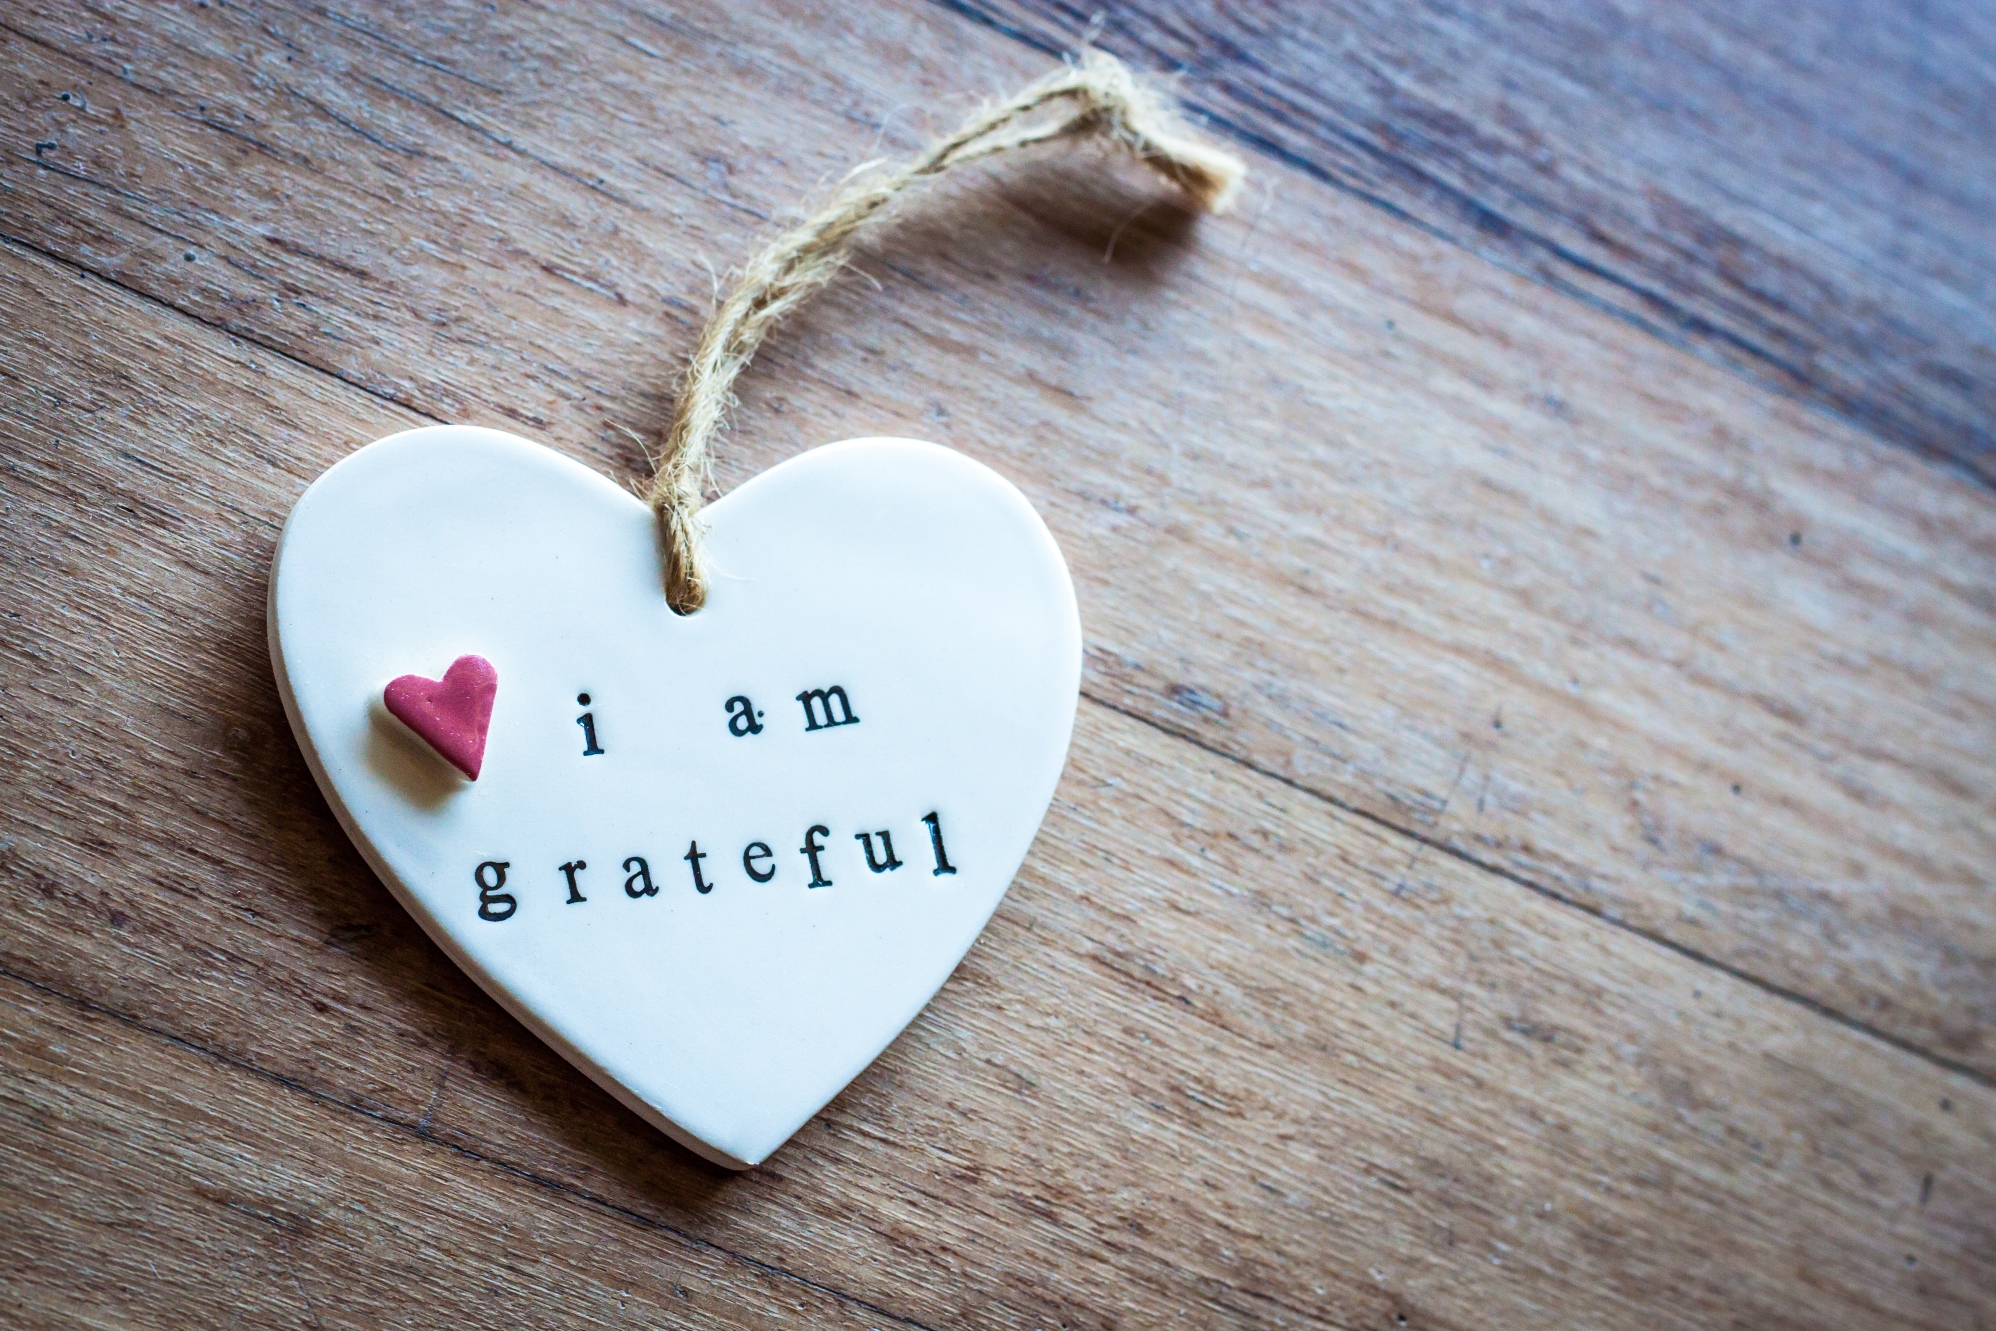 Heart-shaped tag: "I am grateful"